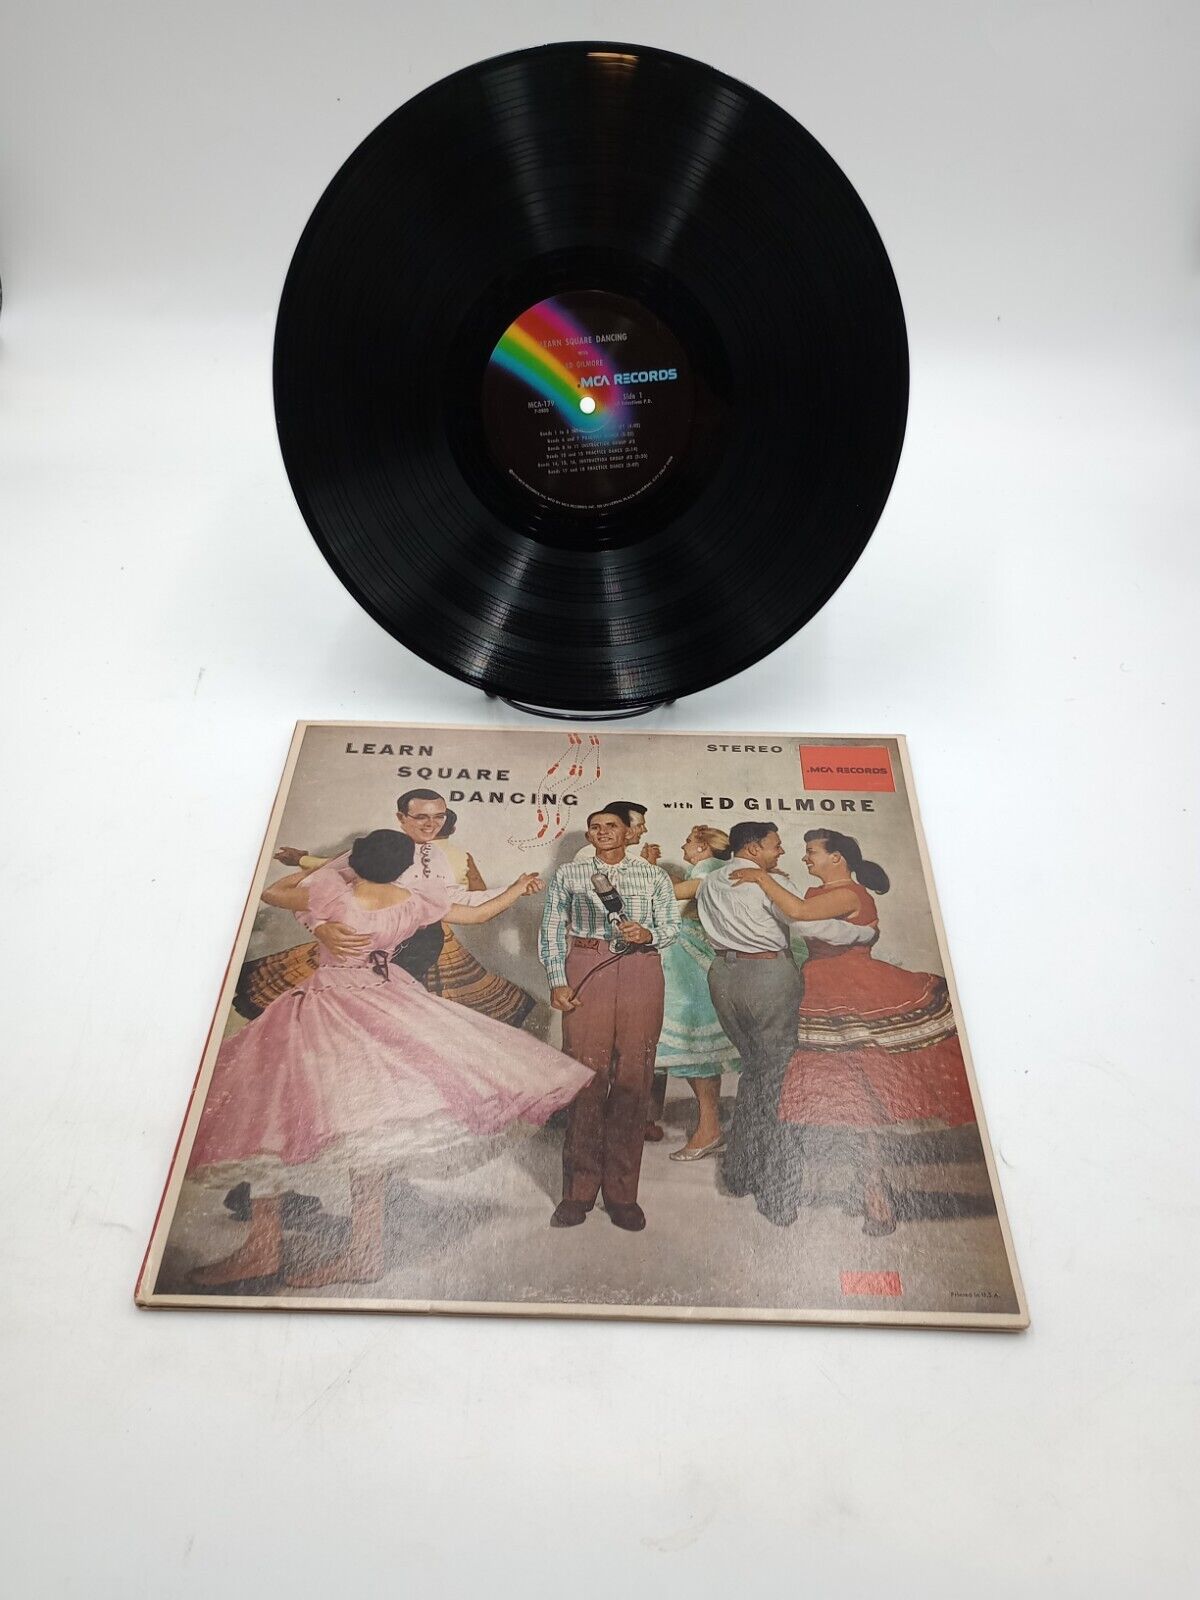 BOXDG15 Ed Gilmore - Learn Square Dancing Decca DL 79051  US